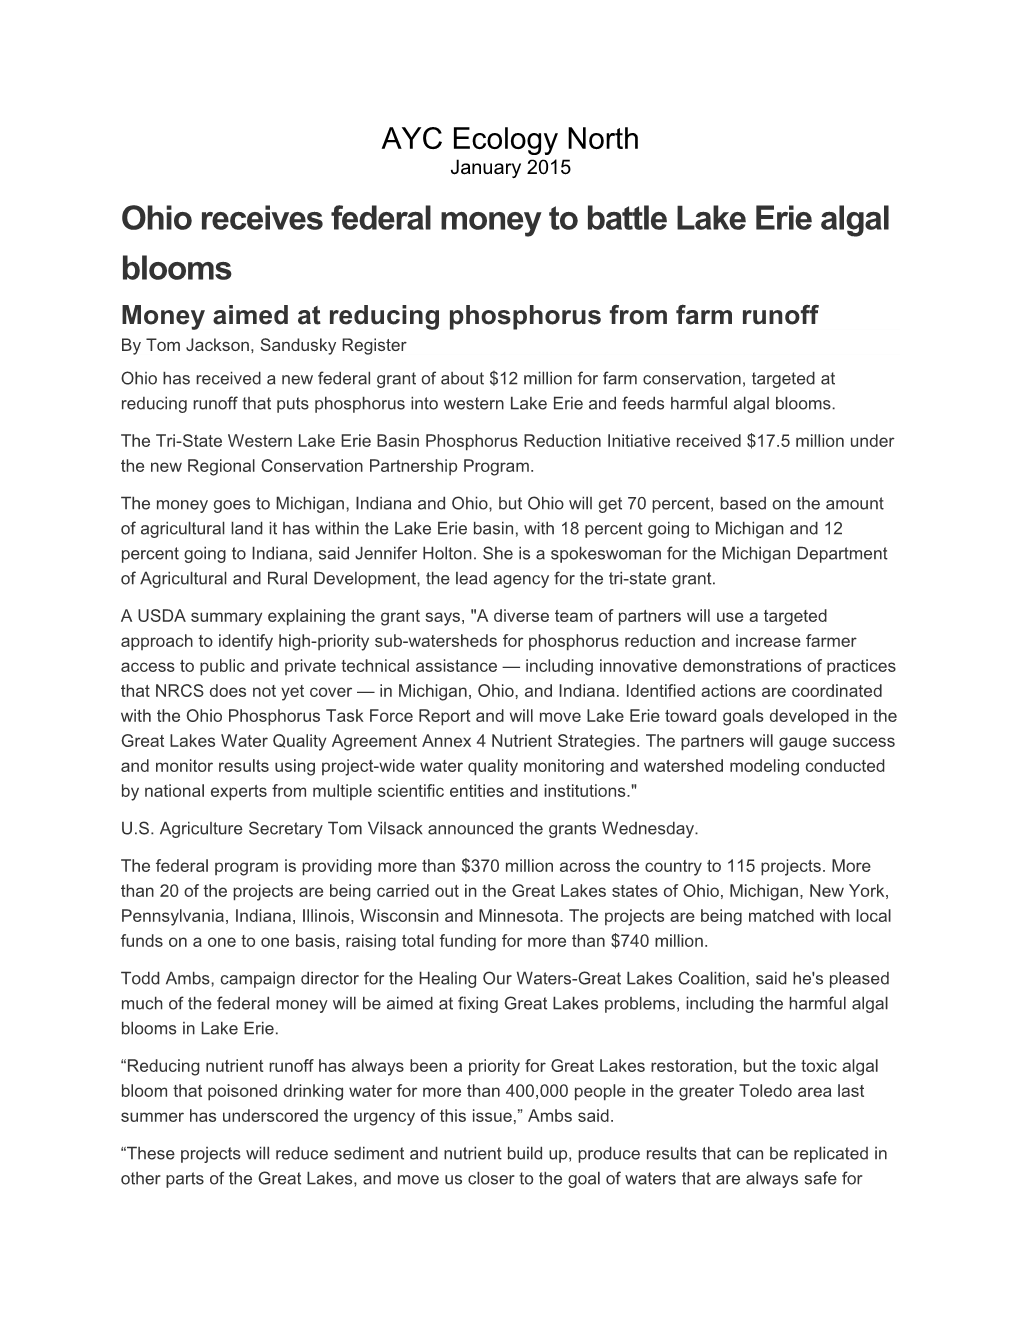 Ohio Receives Federal Money to Battle Lake Erie Algal Blooms